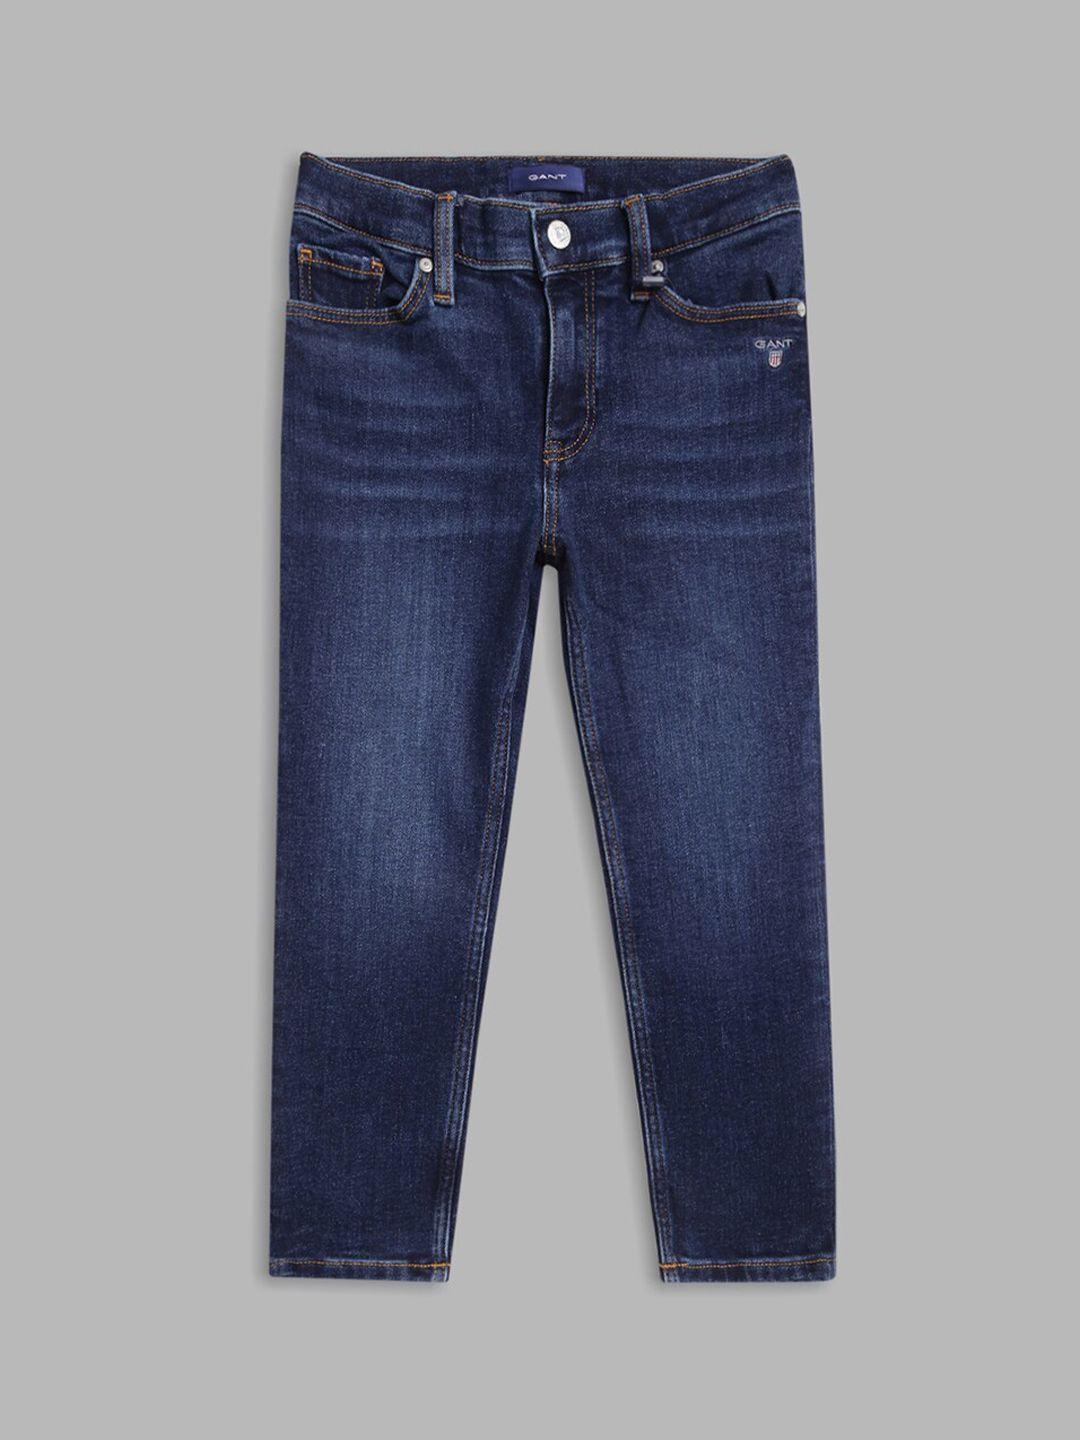 gant-boys-navy-blue-slim-fit-light-fade-jeans